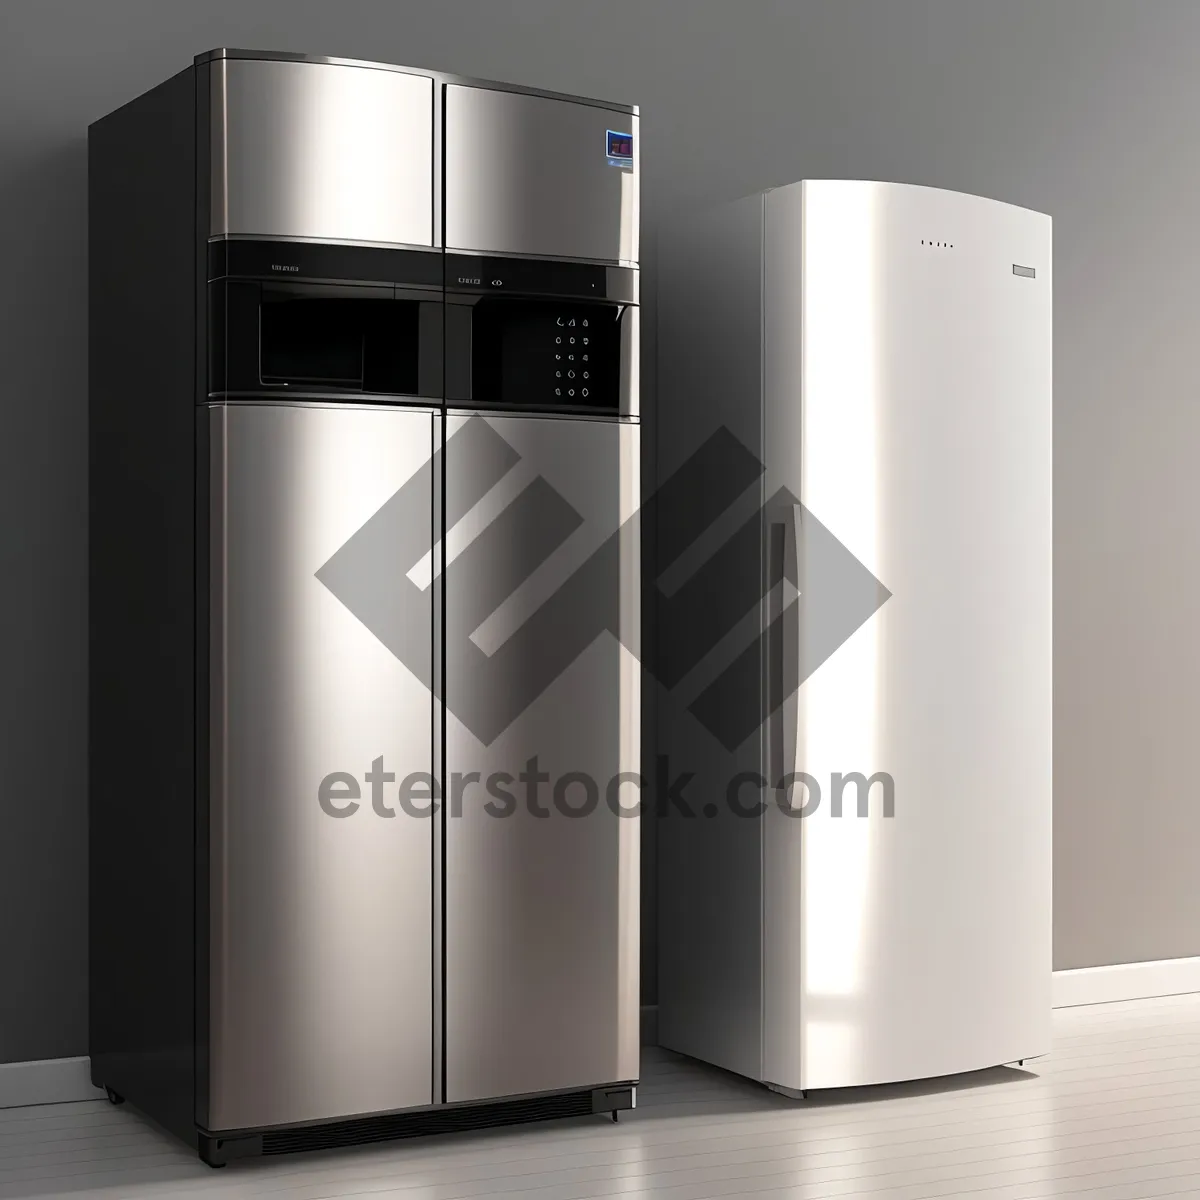 Picture of Modern White Refrigerator in Stylish Interior Design